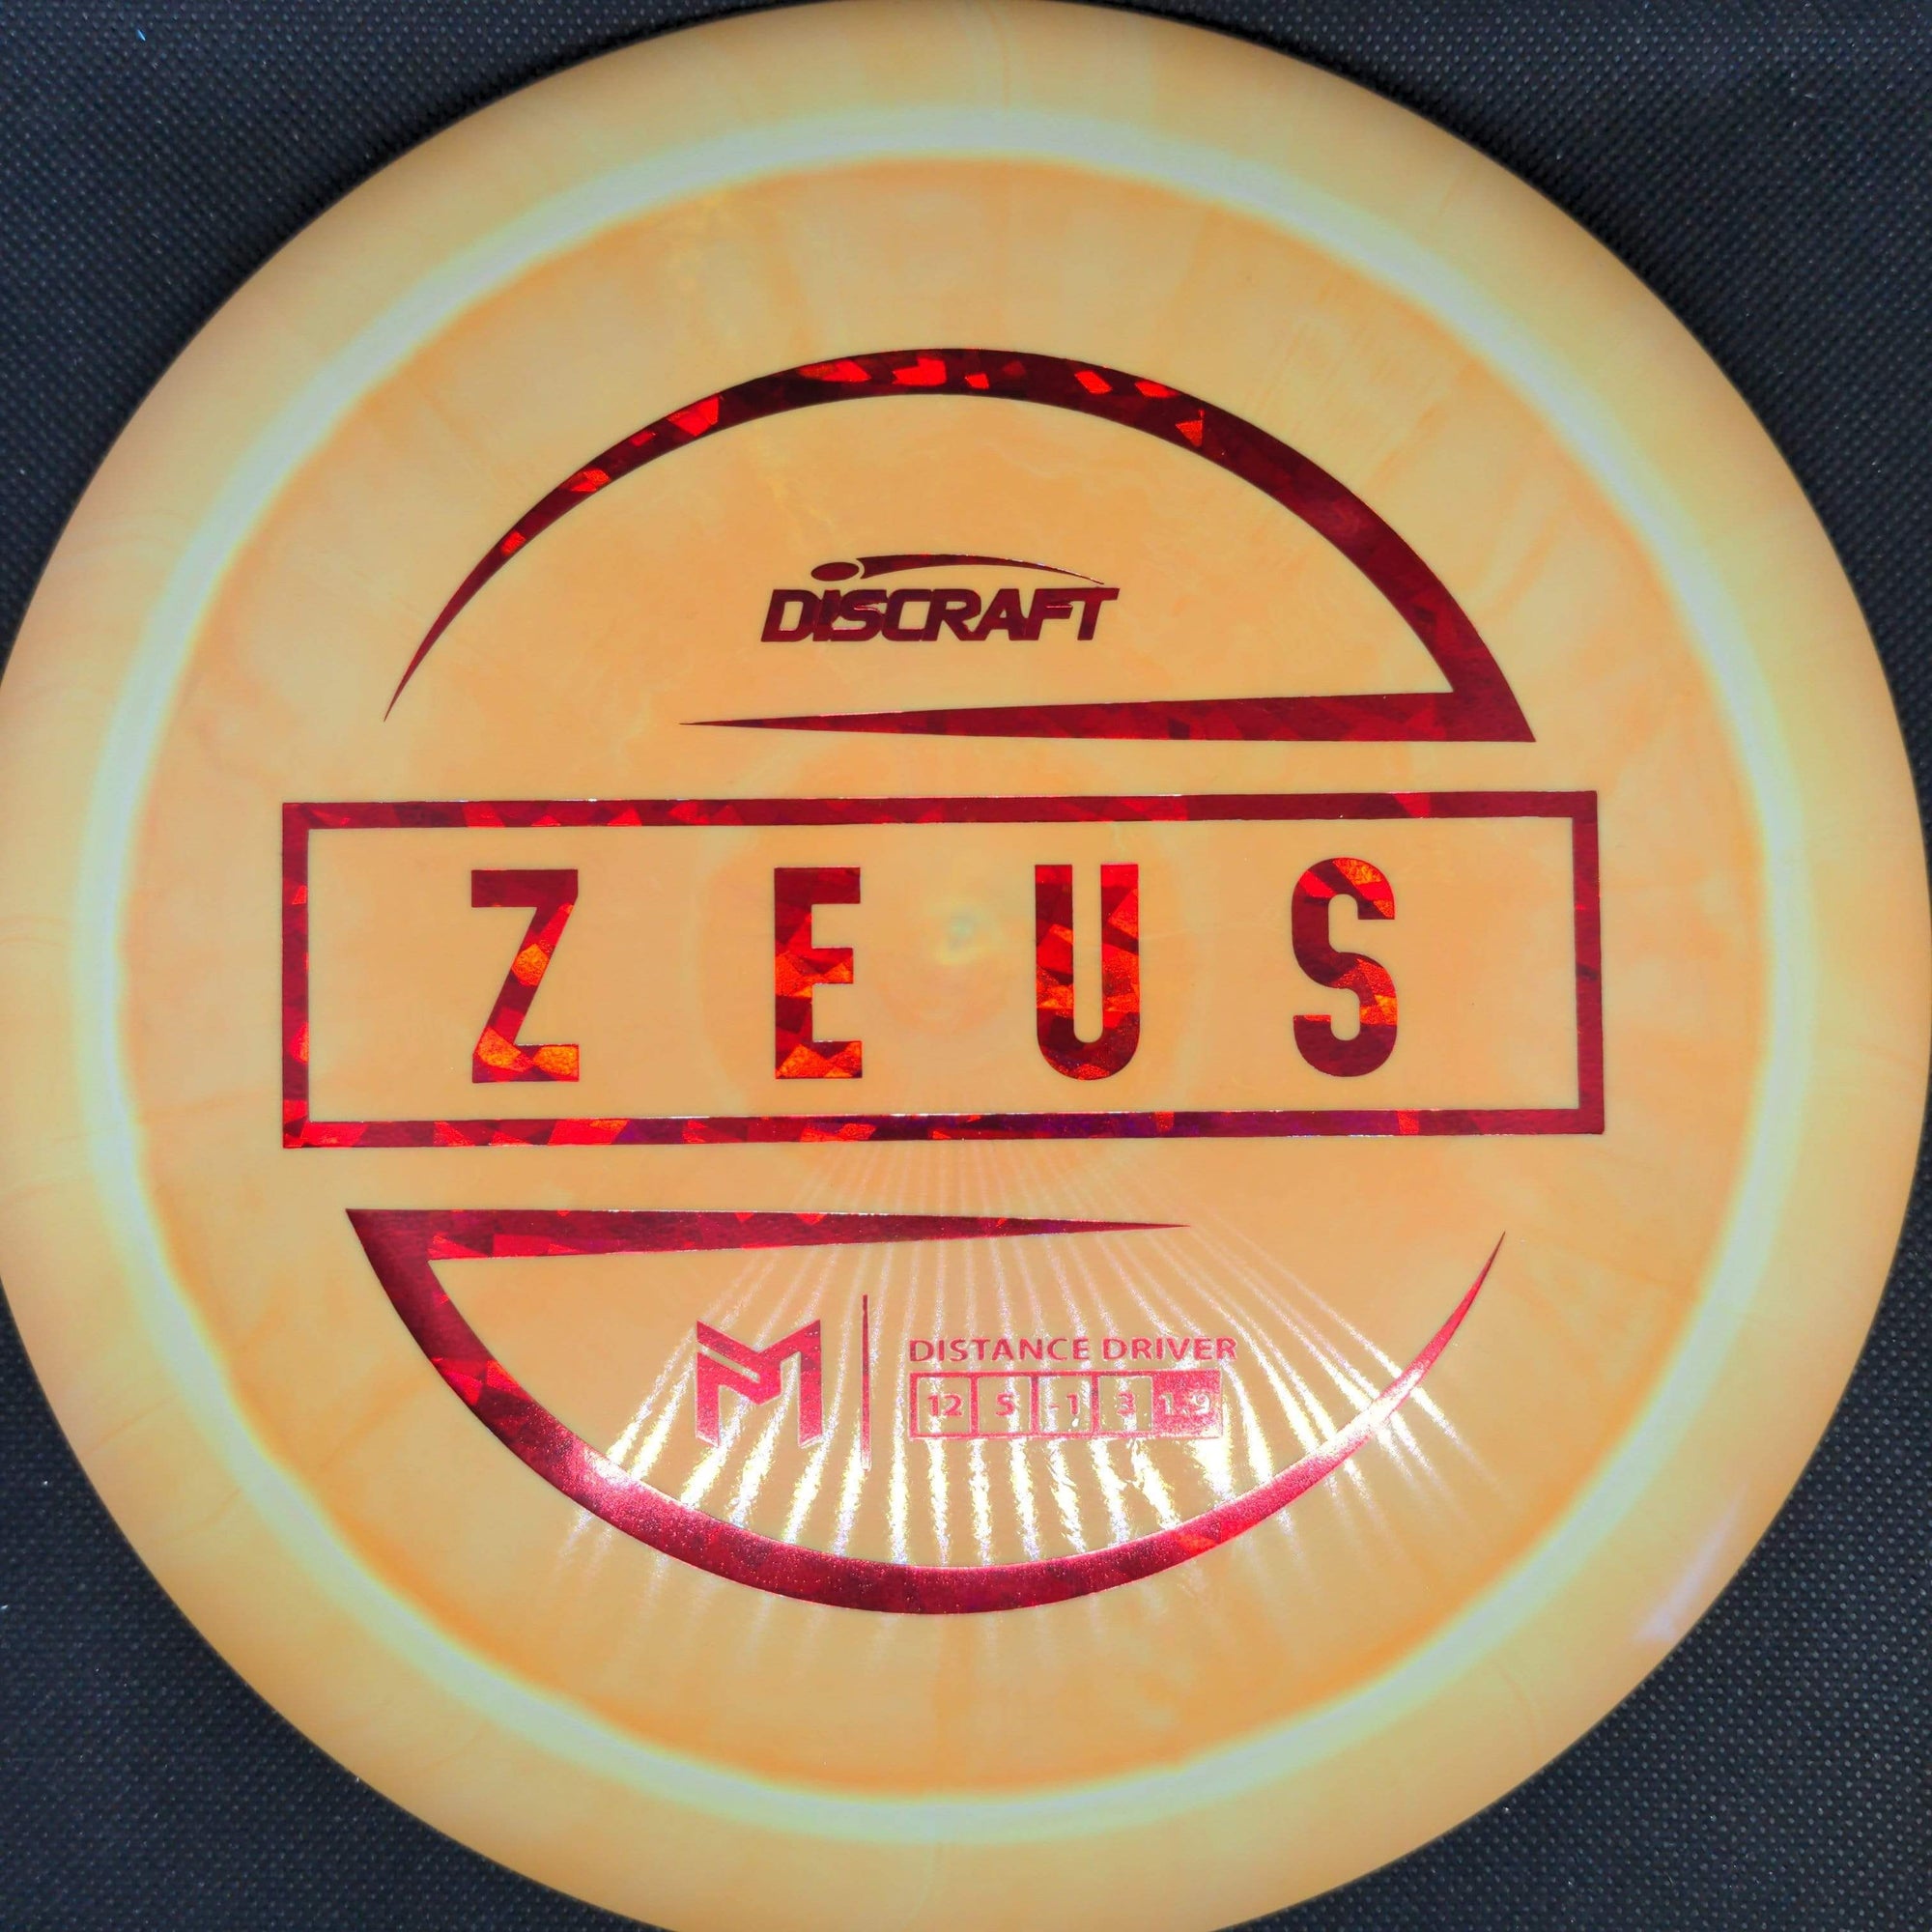 Discraft Distance Driver ESP Zeus